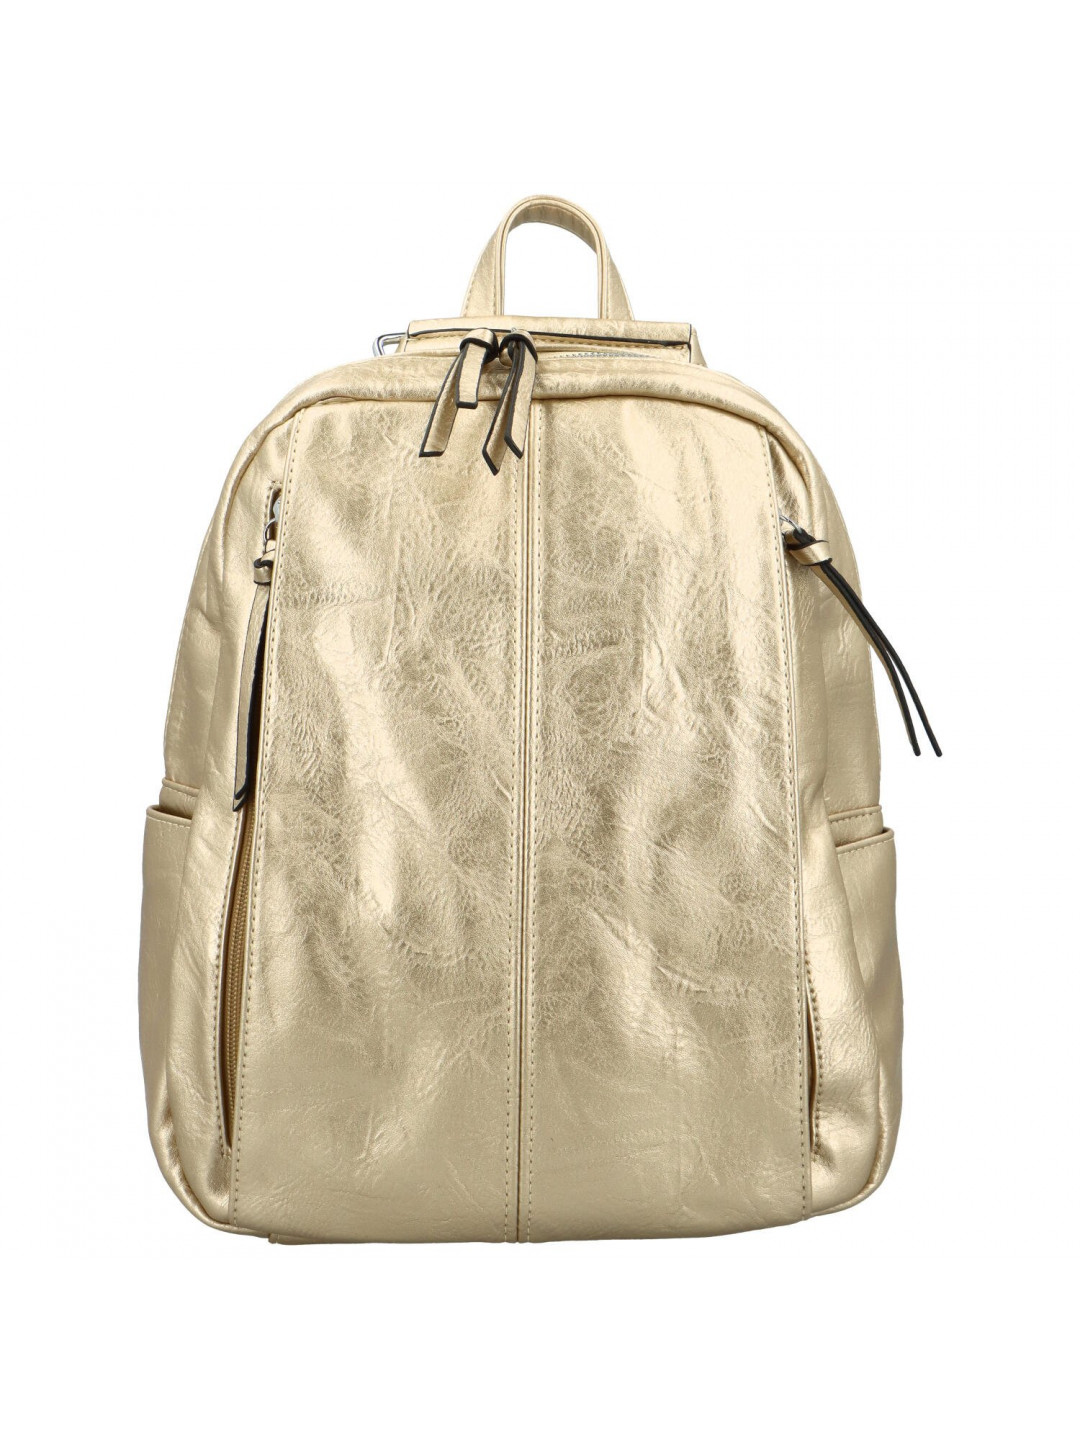 Dámský kabelko batoh zlatý – Firenze Flassica